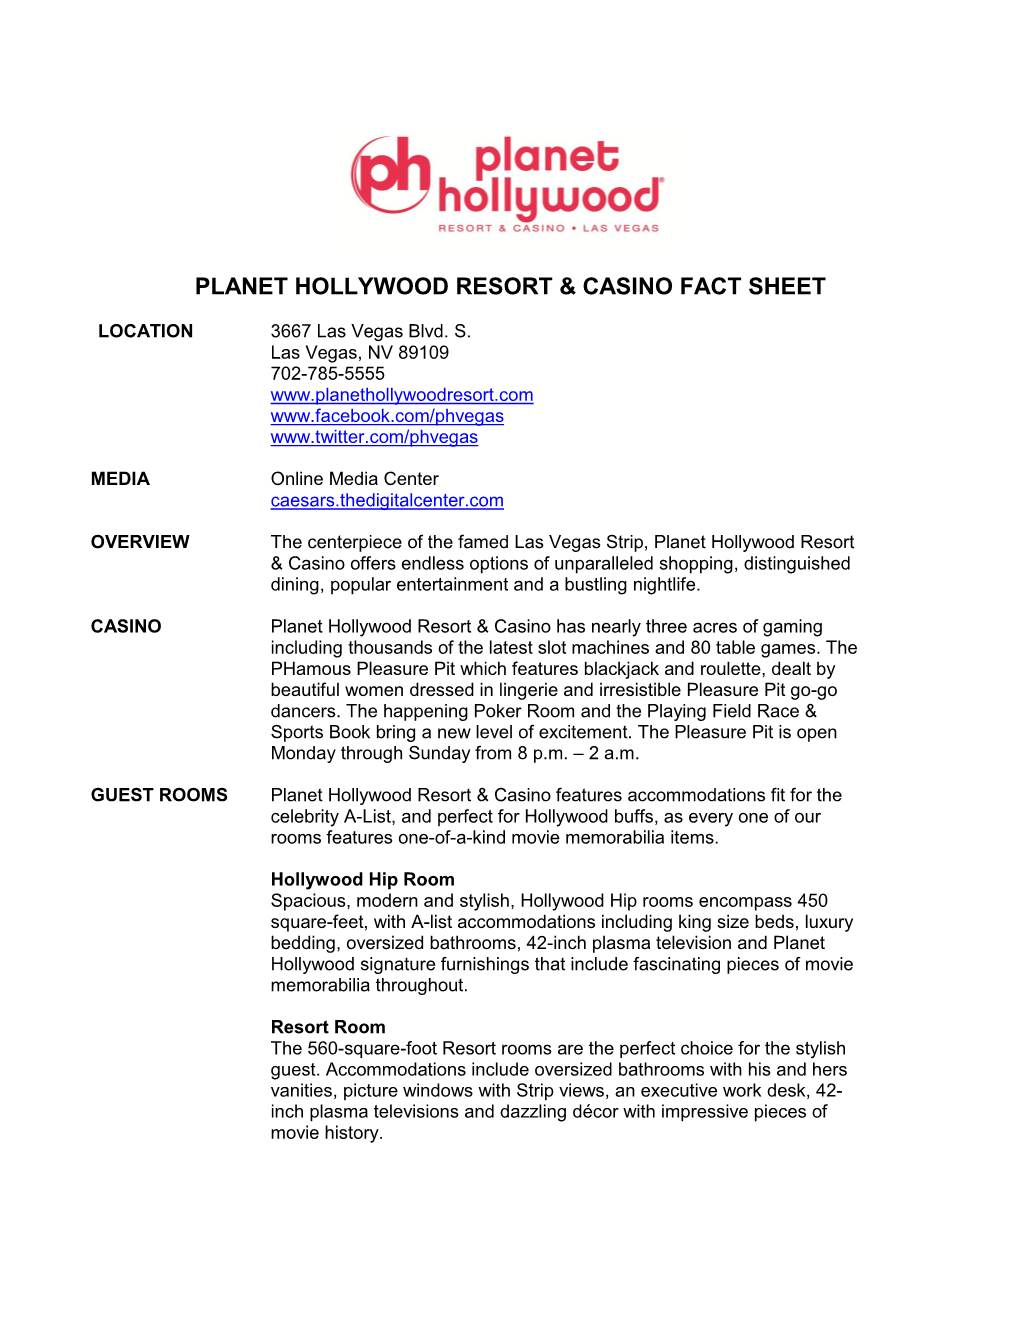 Planet Hollywood Resort & Casino Fact Sheet